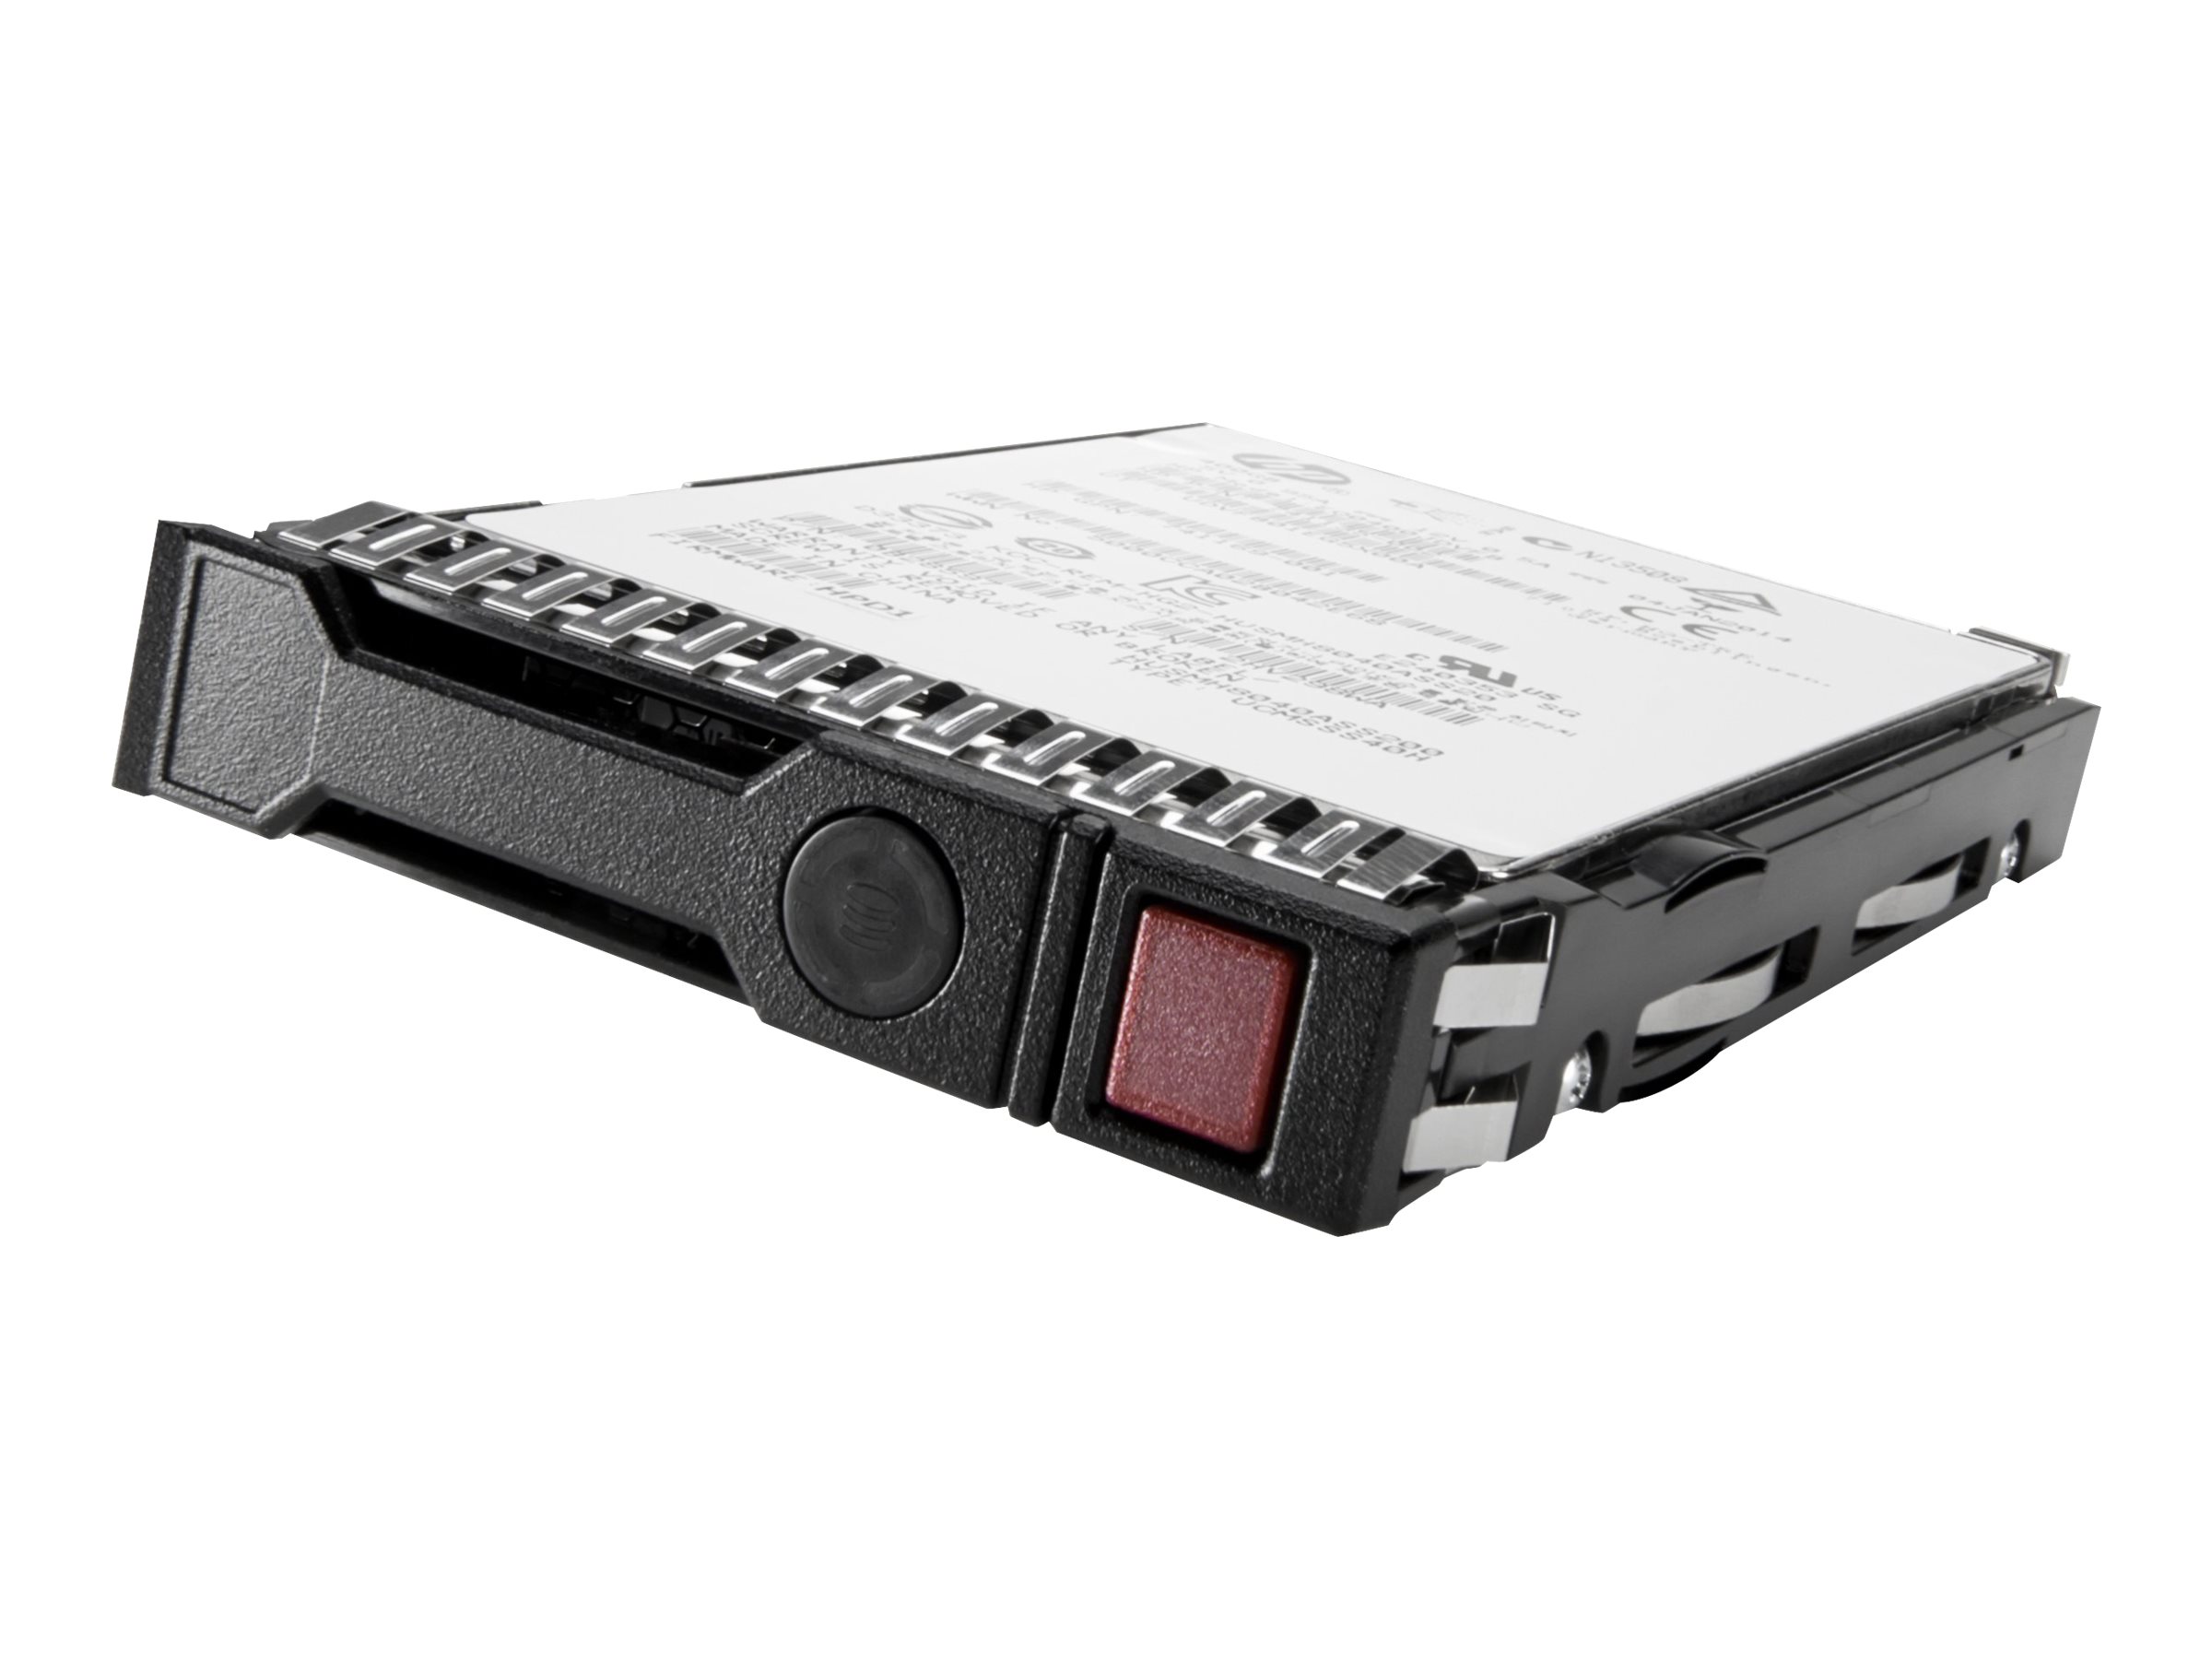 HPE Midline - Festplatte - 8 TB - 3.5" LFF (8.9 cm LFF) - SAS 12Gb/s - 7200 rpm